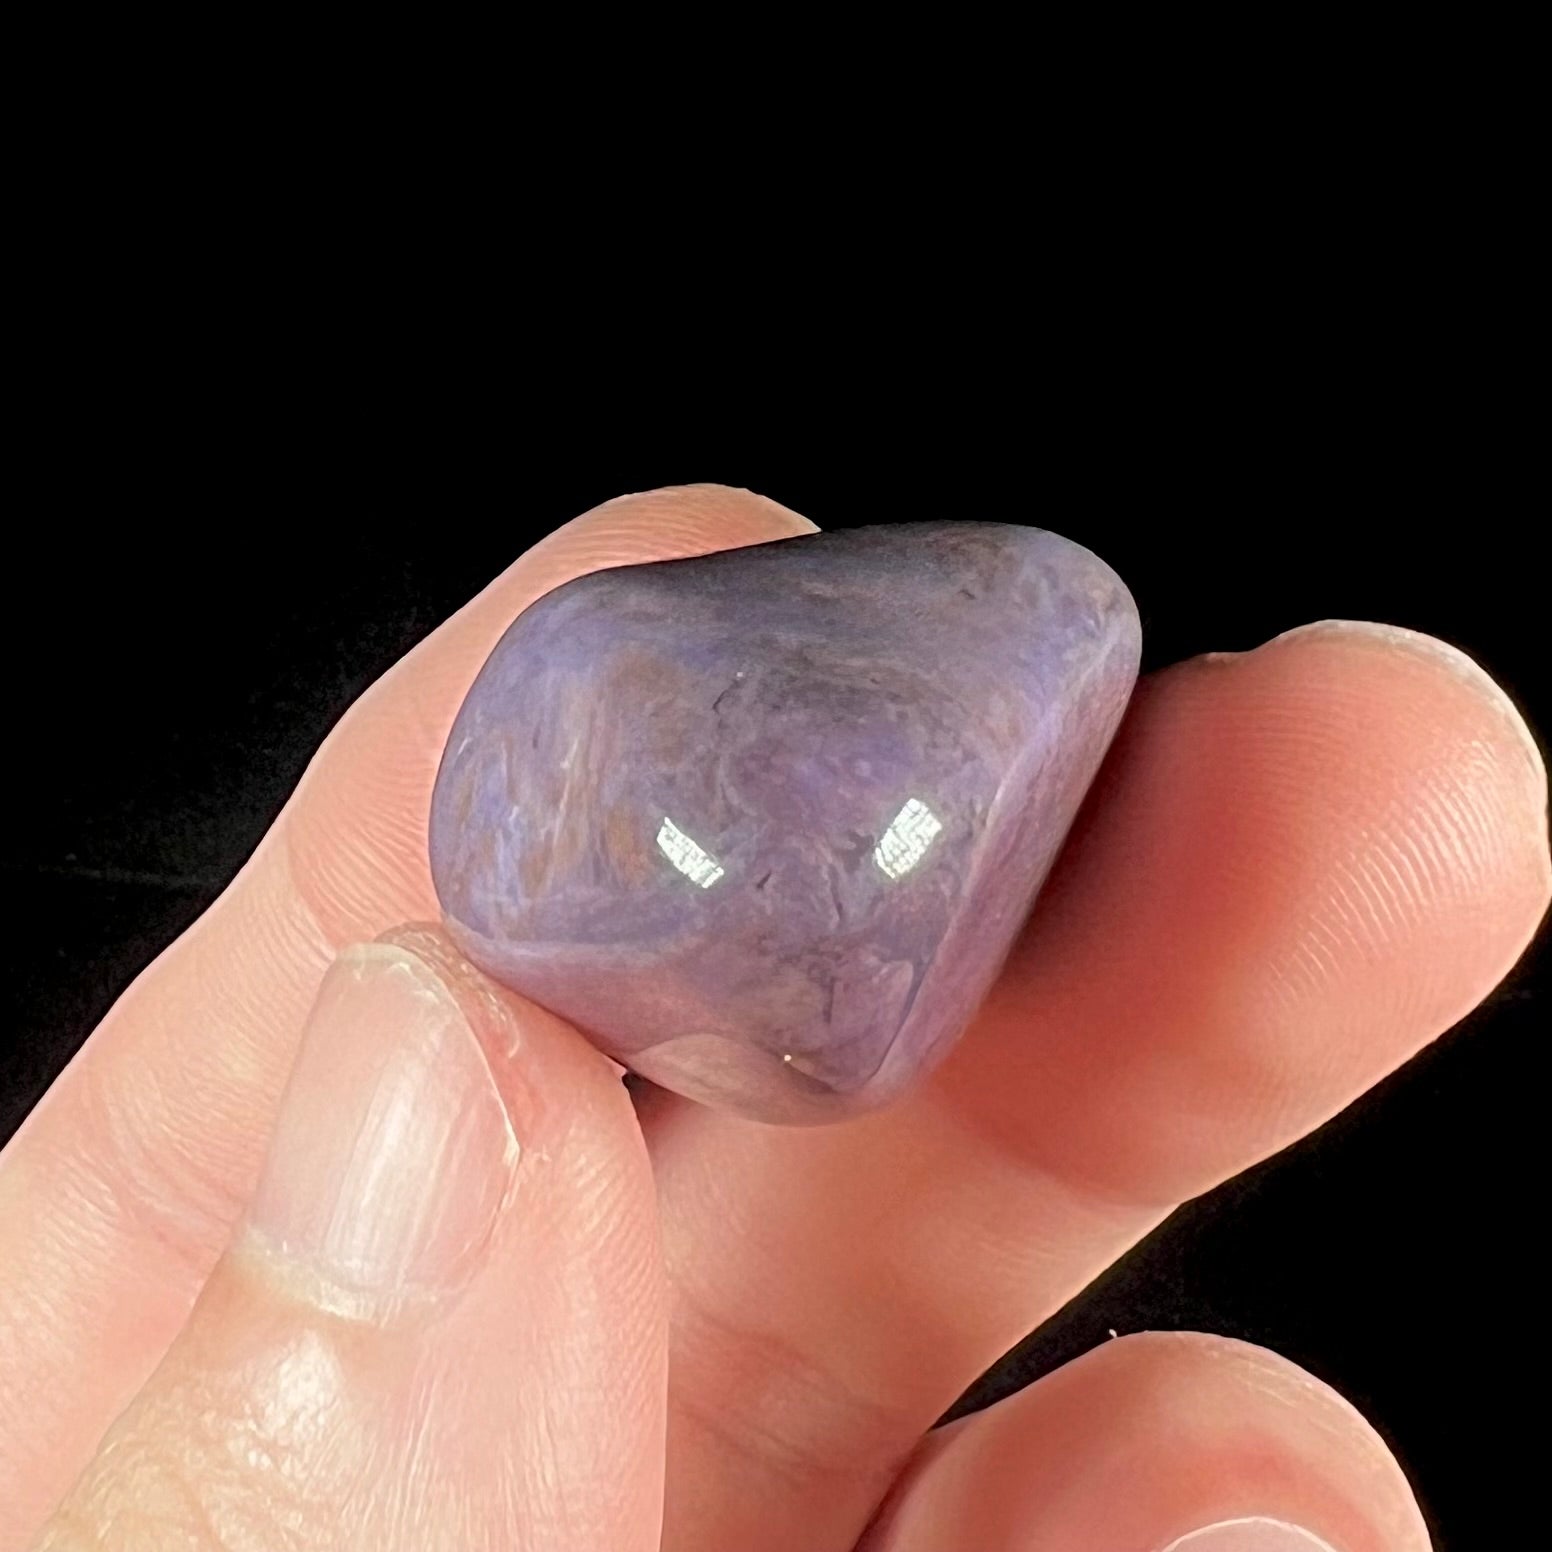 A tumbled turkiyenite stone, commonly referred to as "Turkish purple jade."